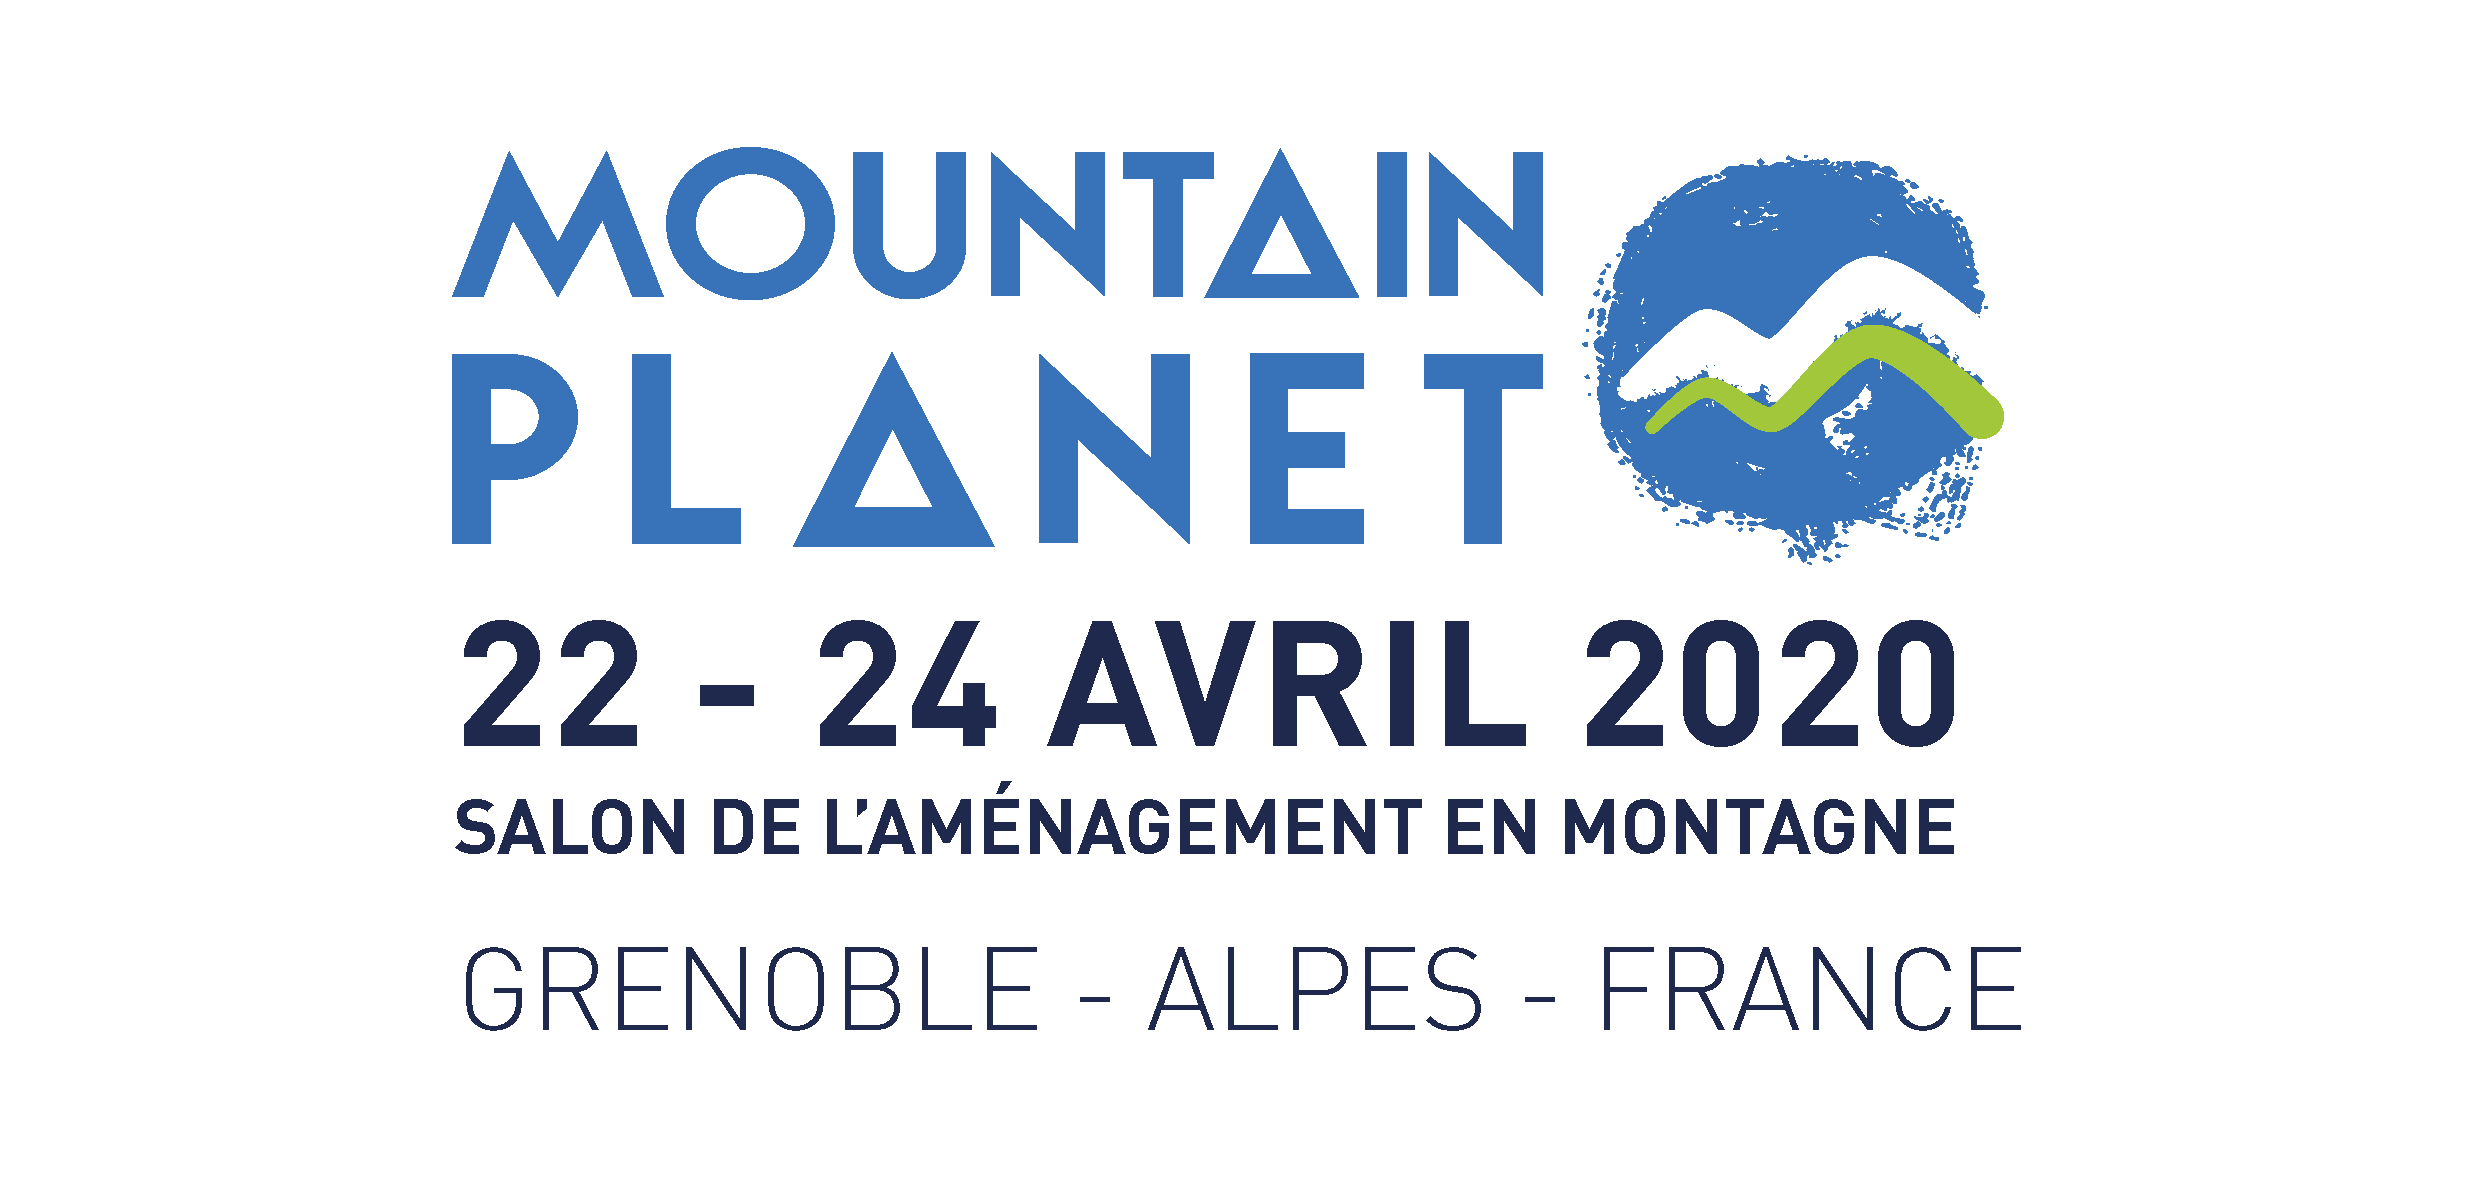 RDV au prochain Mountain Planet à Grenoble du 22 au 24 avril 2020, stand n°242.